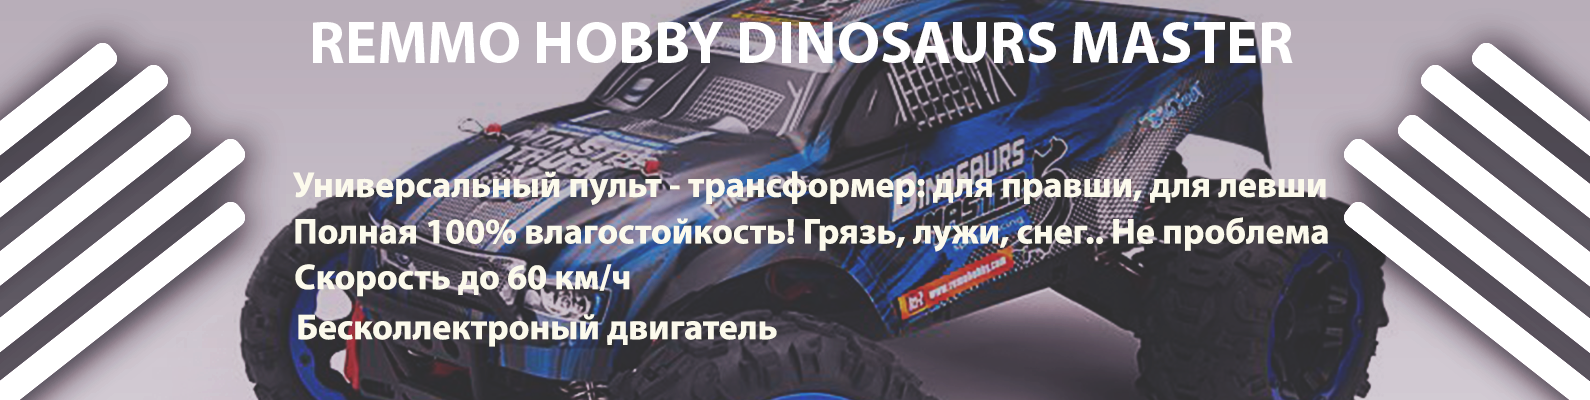 remmo hobby dinosaurs master 